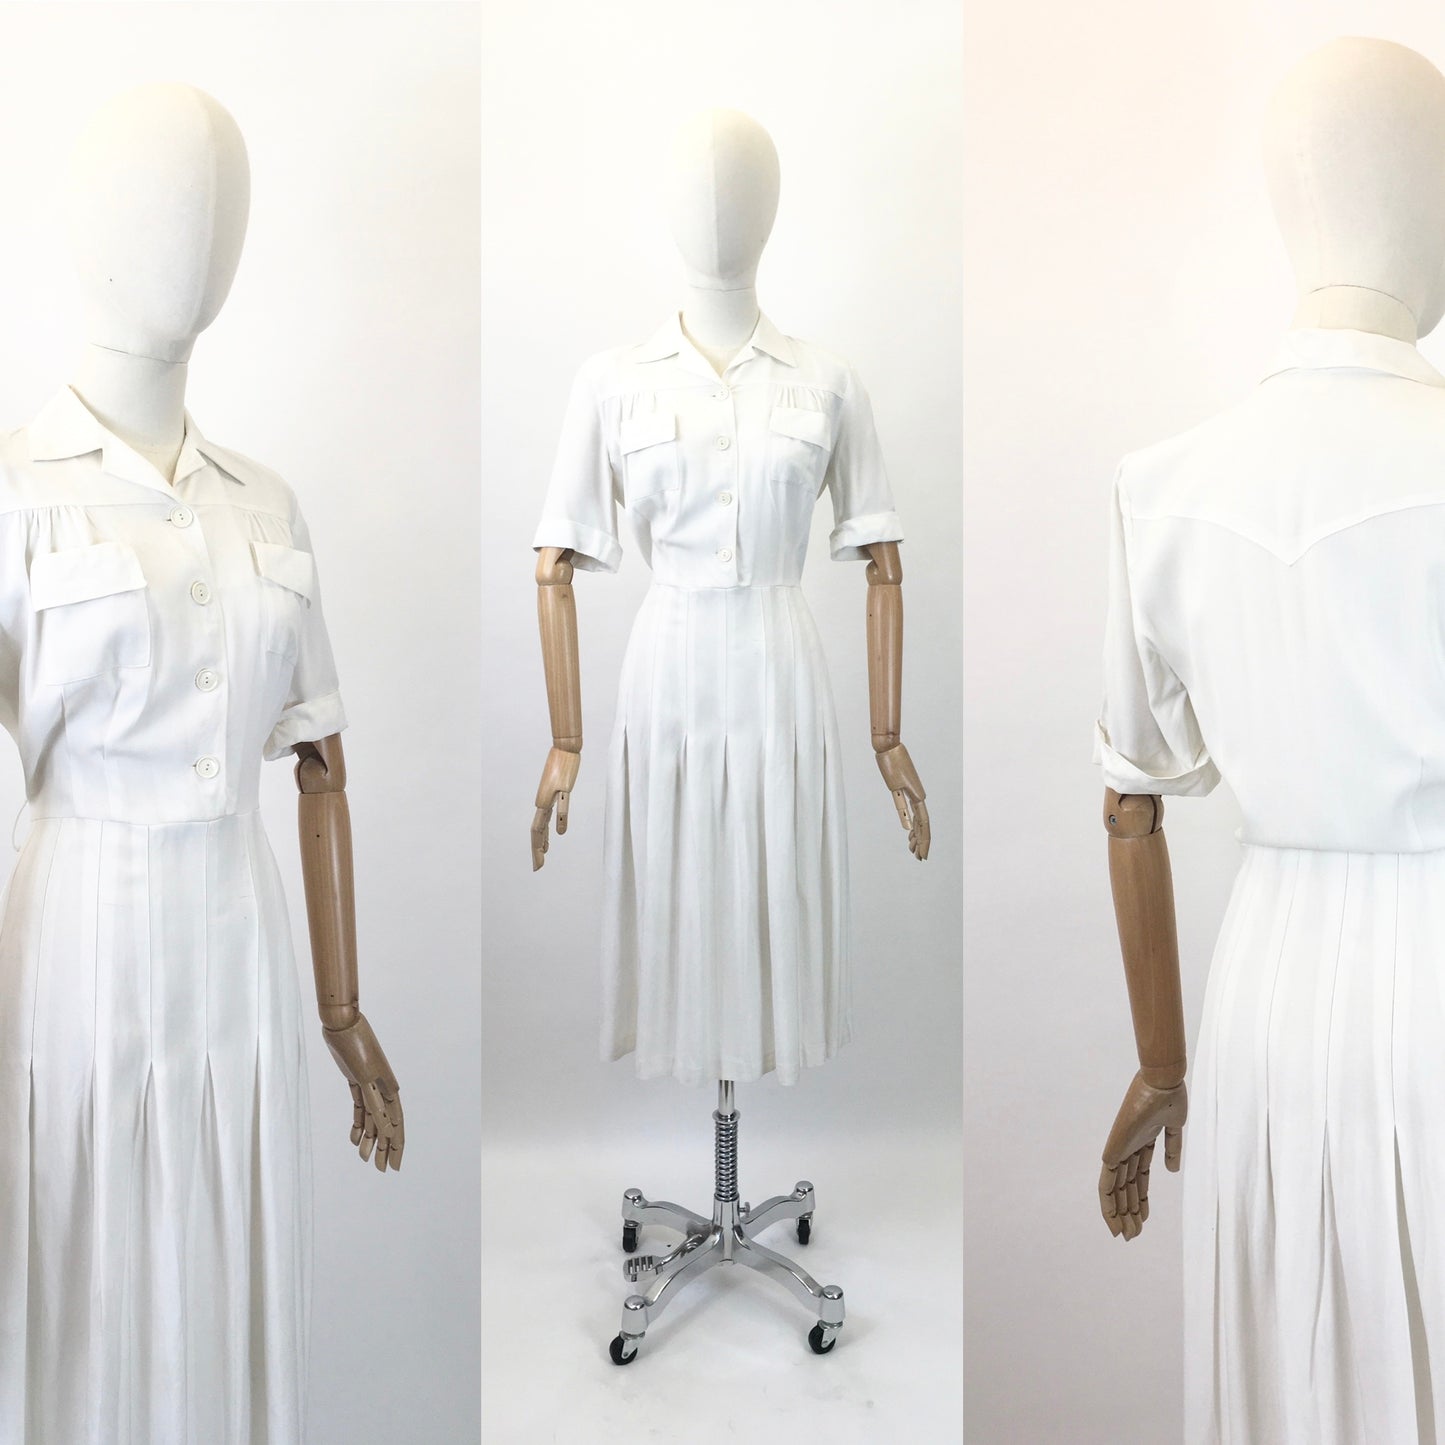 Original 1940’s Fabulous Sportwear Tennis Dress - In A Crisp White Linen With Lovely Details